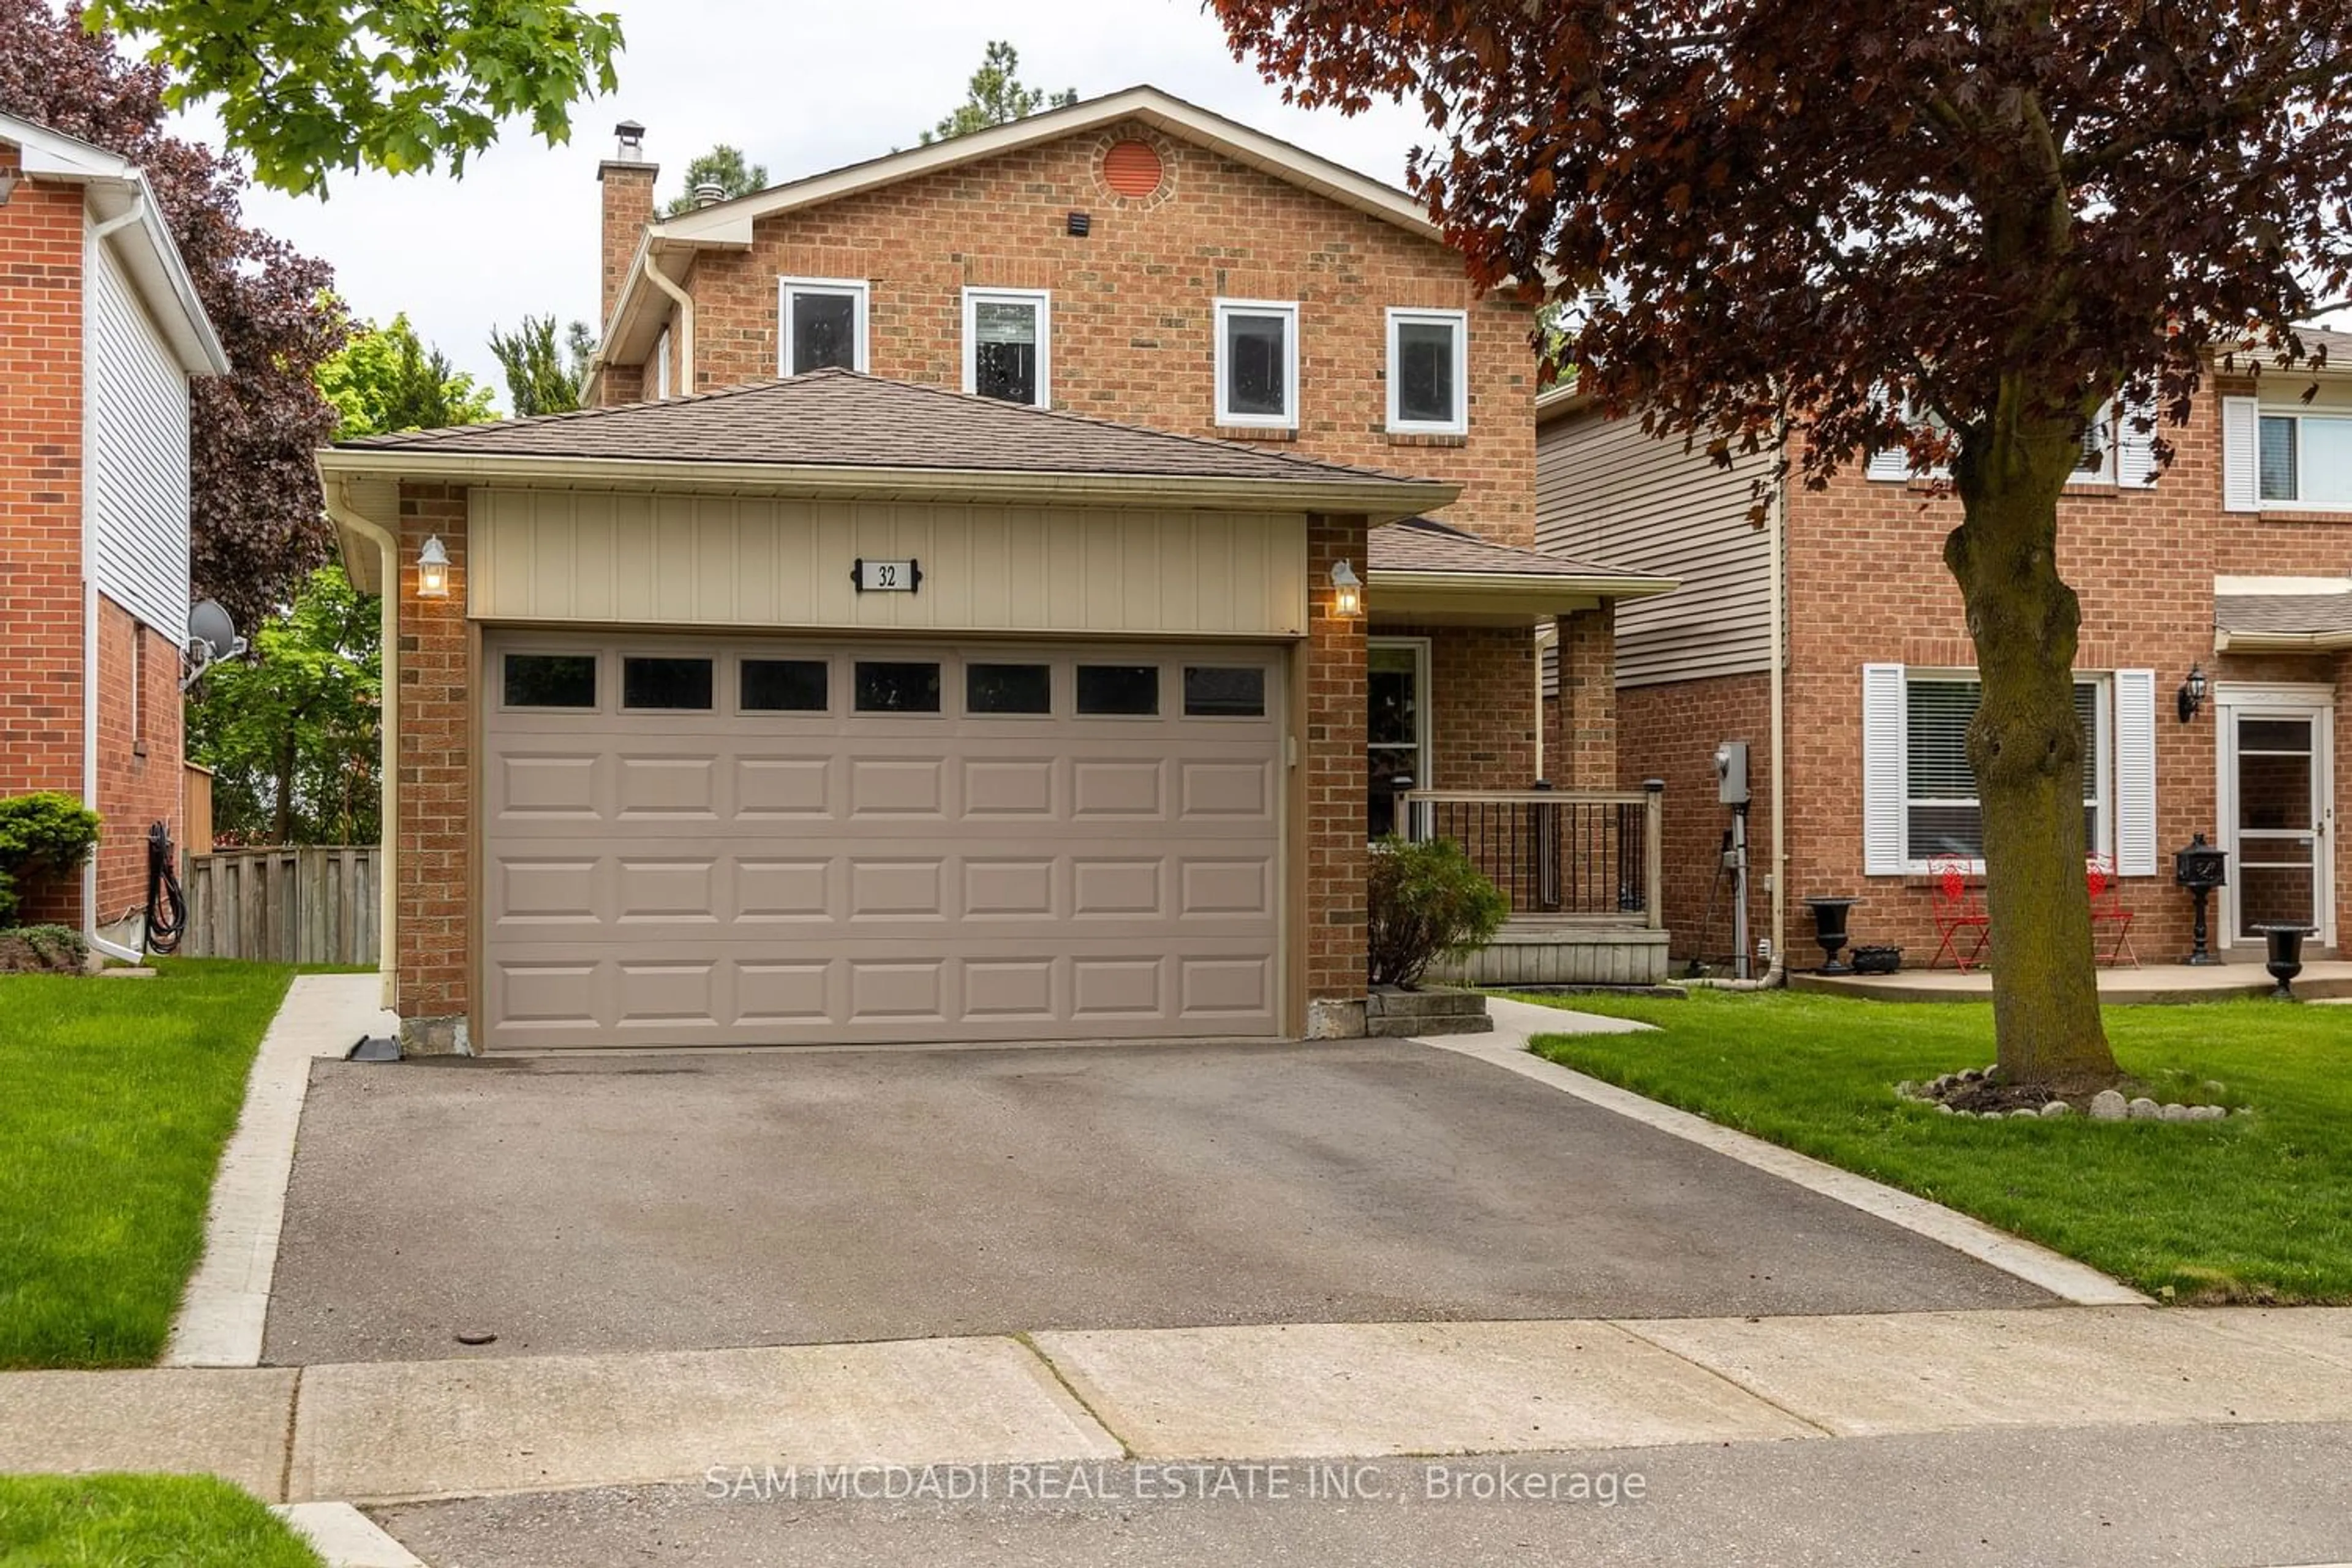 Home with brick exterior material for 32 Cassander Cres, Brampton Ontario L6Z 1Z2